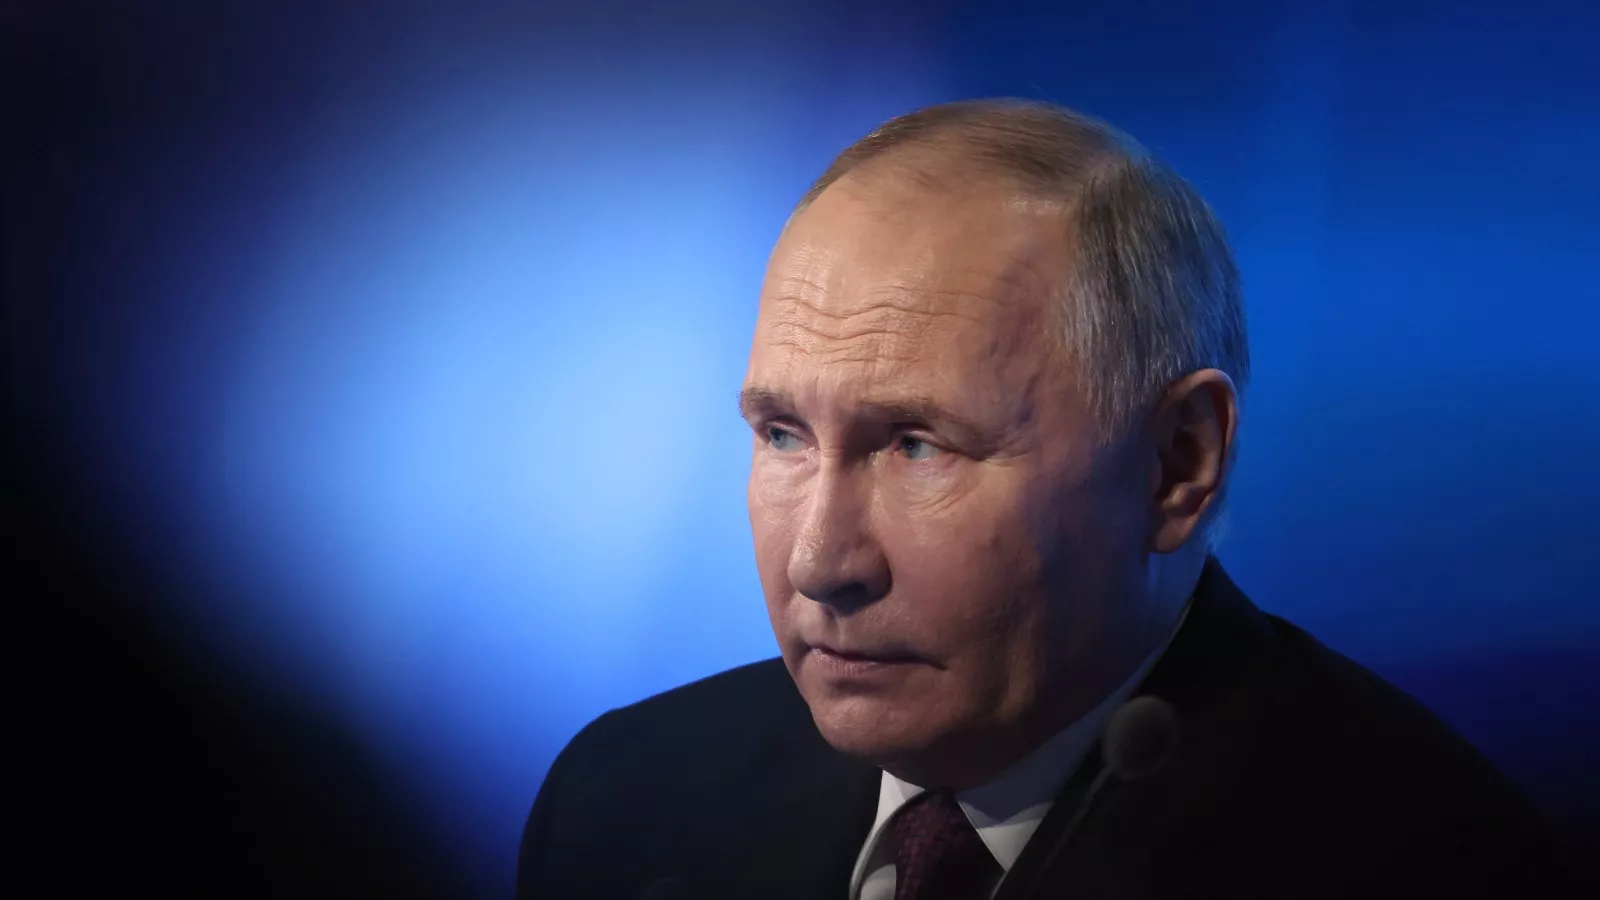 Putin seeks answers as radioactive leak fears grow